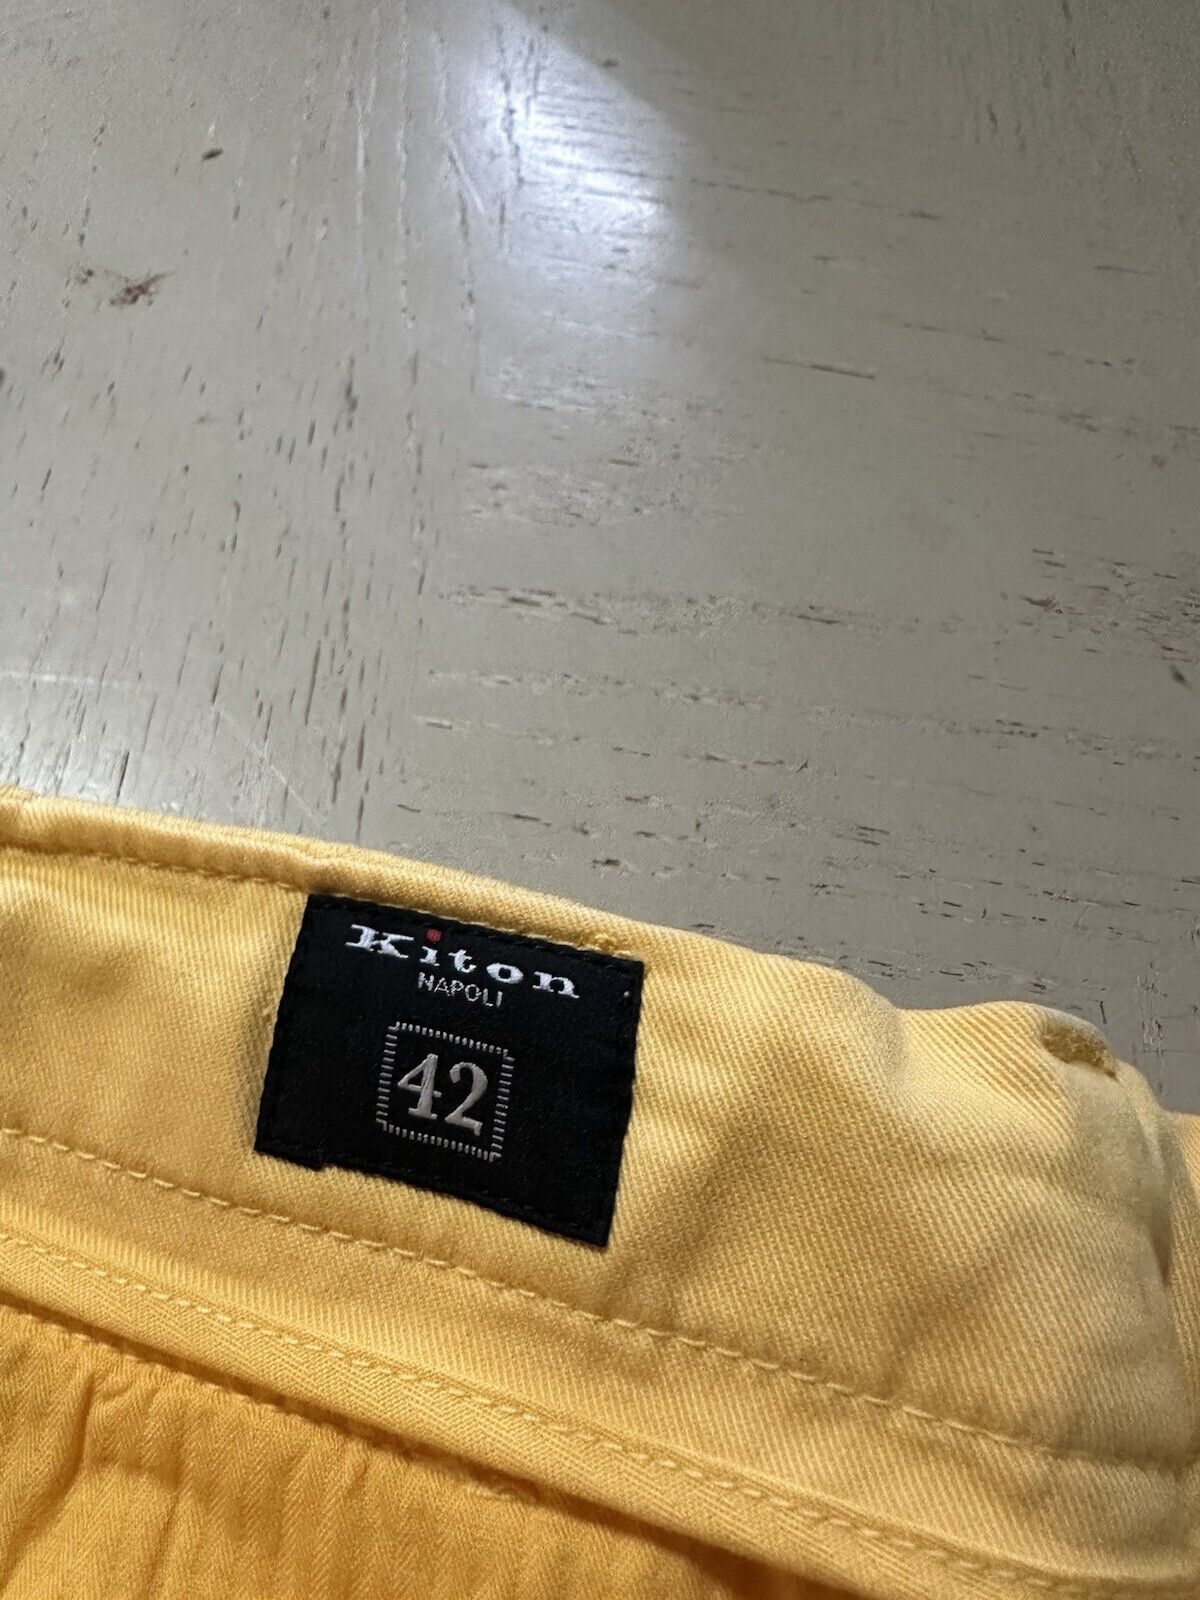 Kiton Men Cotton Woven Short Pants Color Yellow Size 42 US/58 Eu Italy New $1095